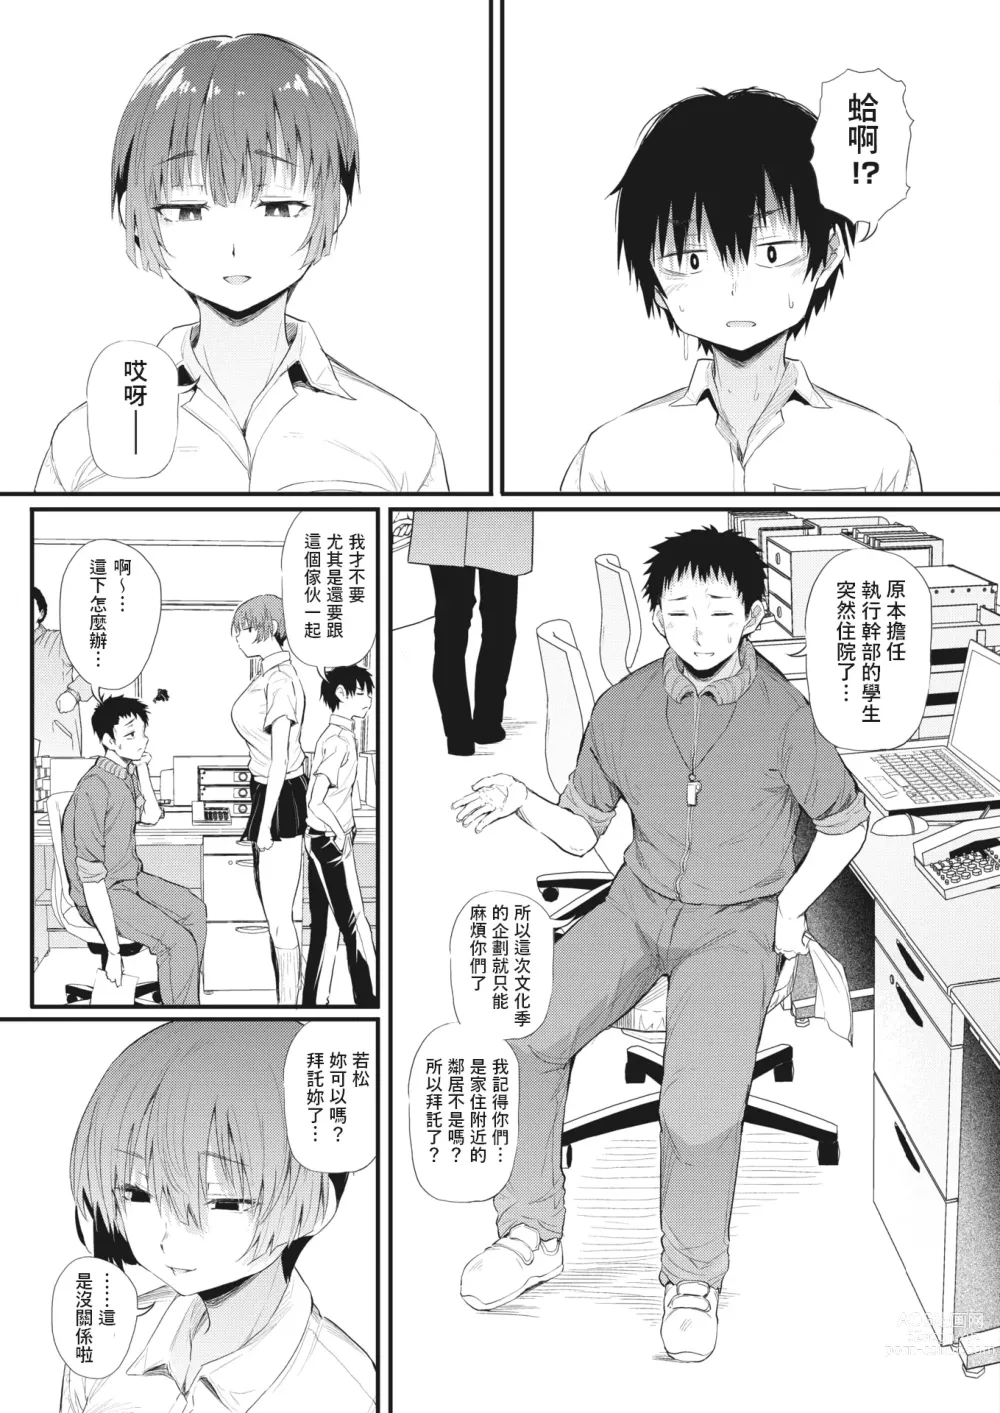 Page 7 of manga Mado no Mukou no Osananajimi